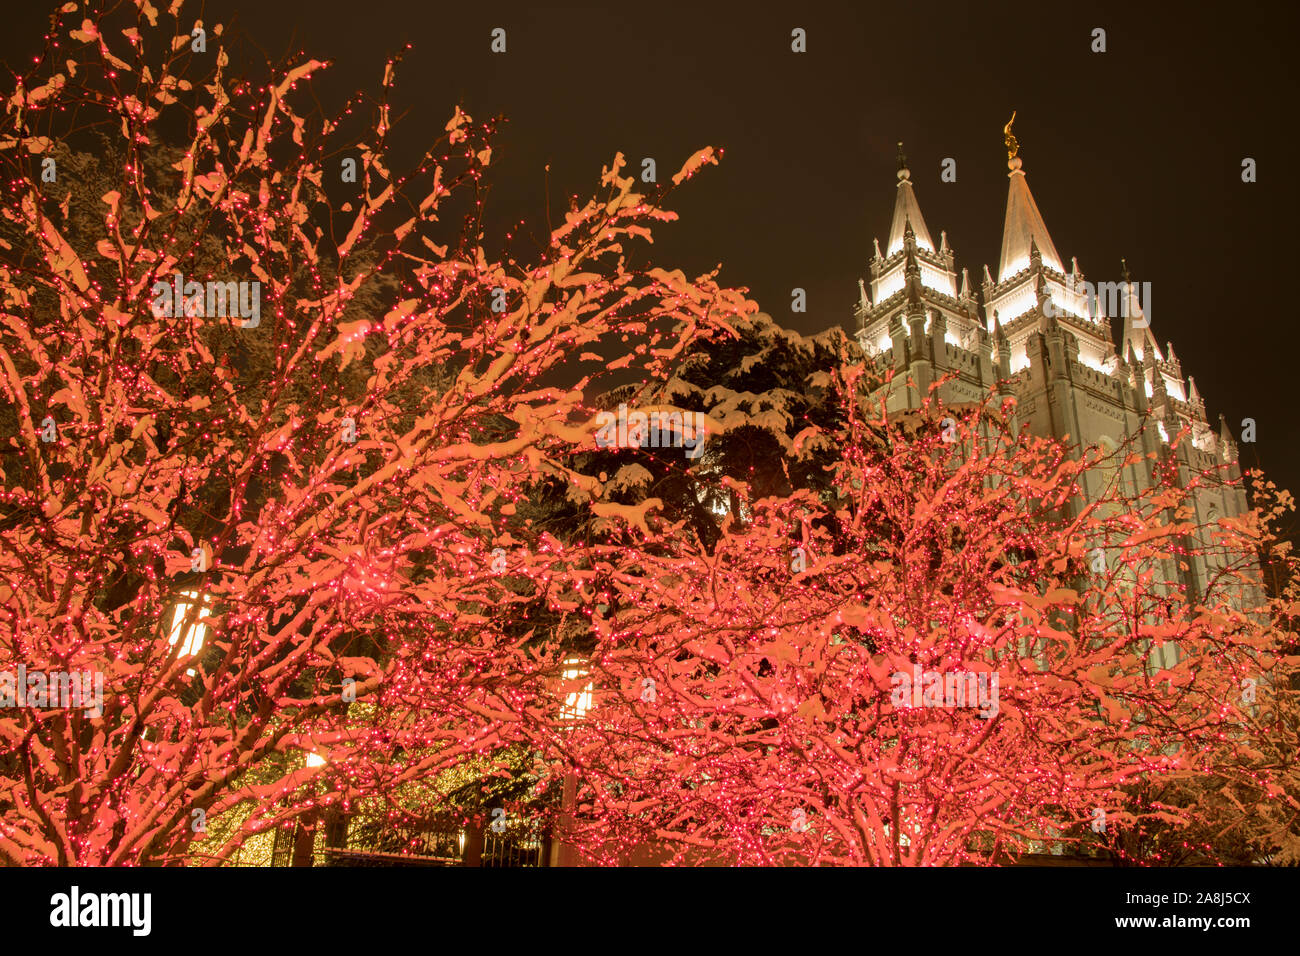 Natale descorations nella neve, LDS (Mormone Tempio), Temple Square, Salt Lake City, Utah Foto Stock